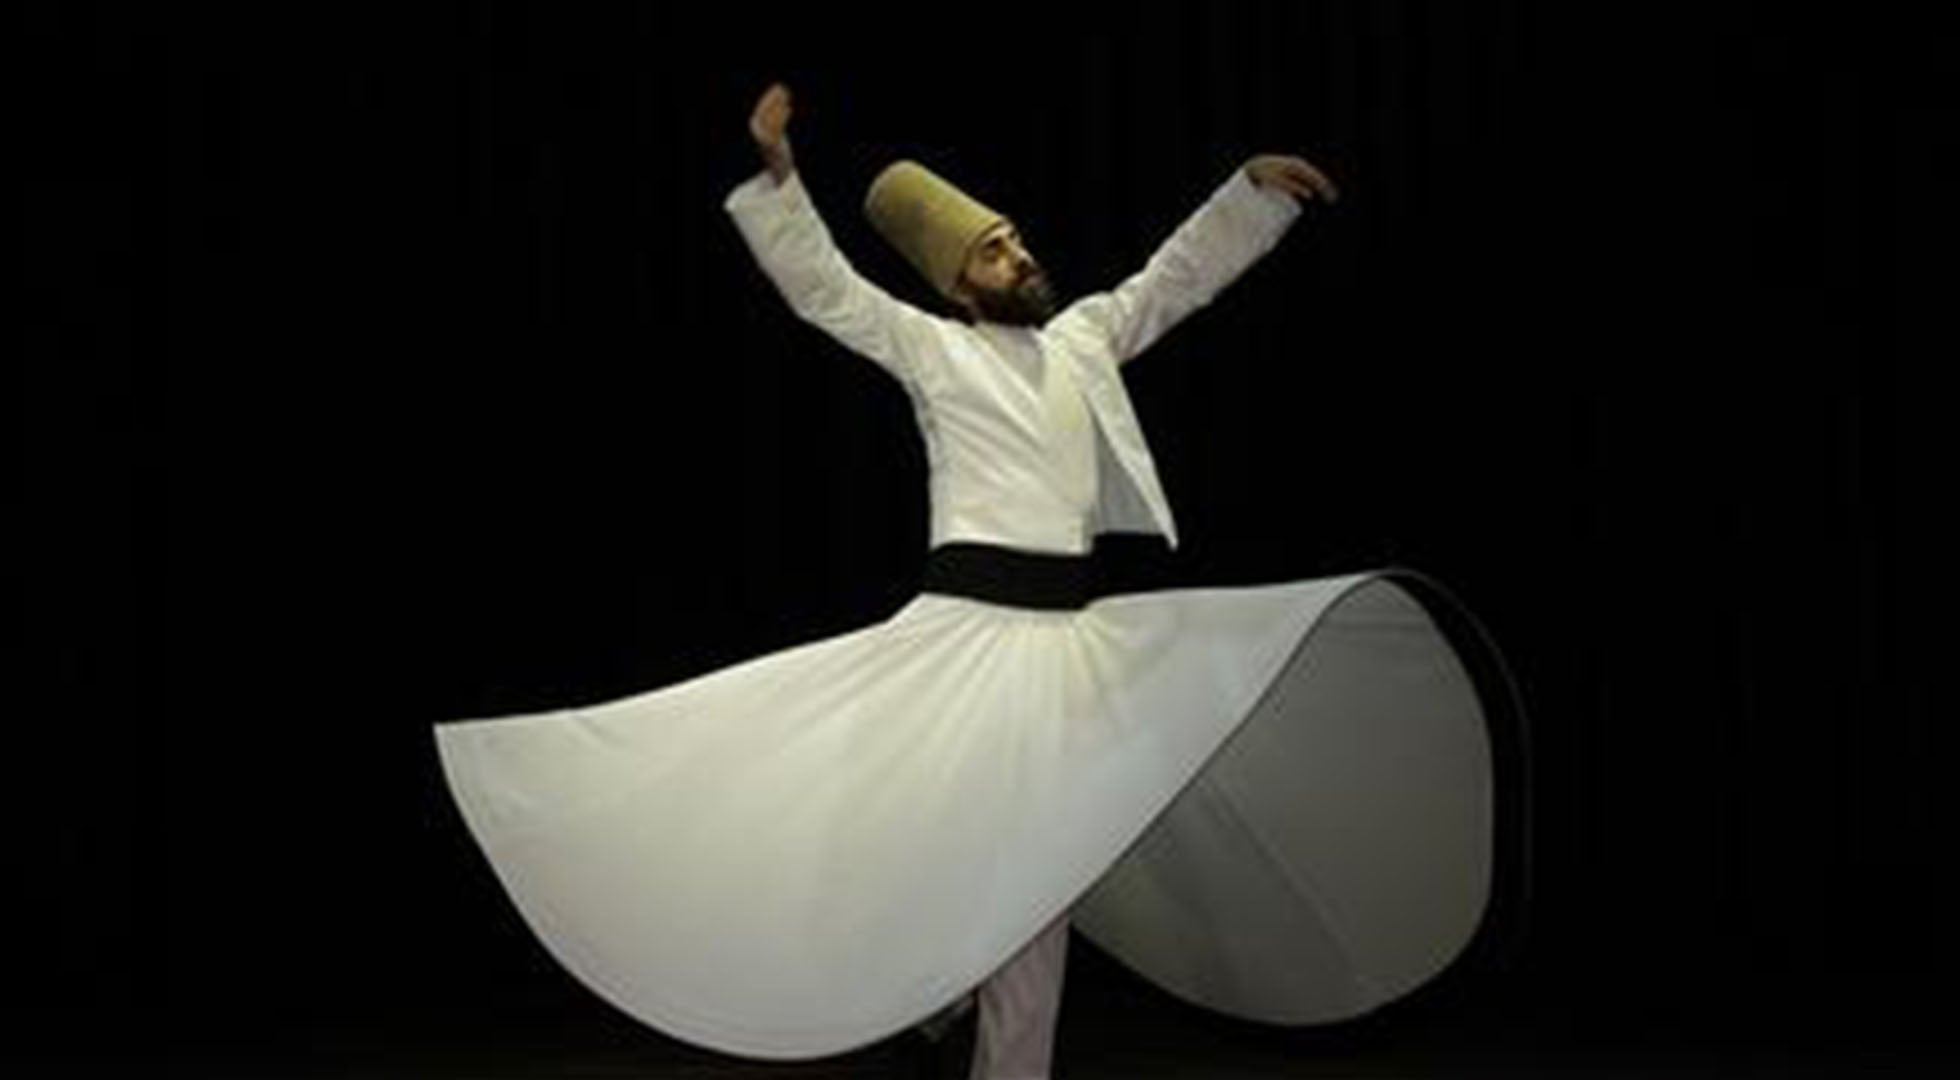  Finding Beauty in Sufism - Sufi Seyit Sercan Çelik, Turkish Dancer and Choreographer